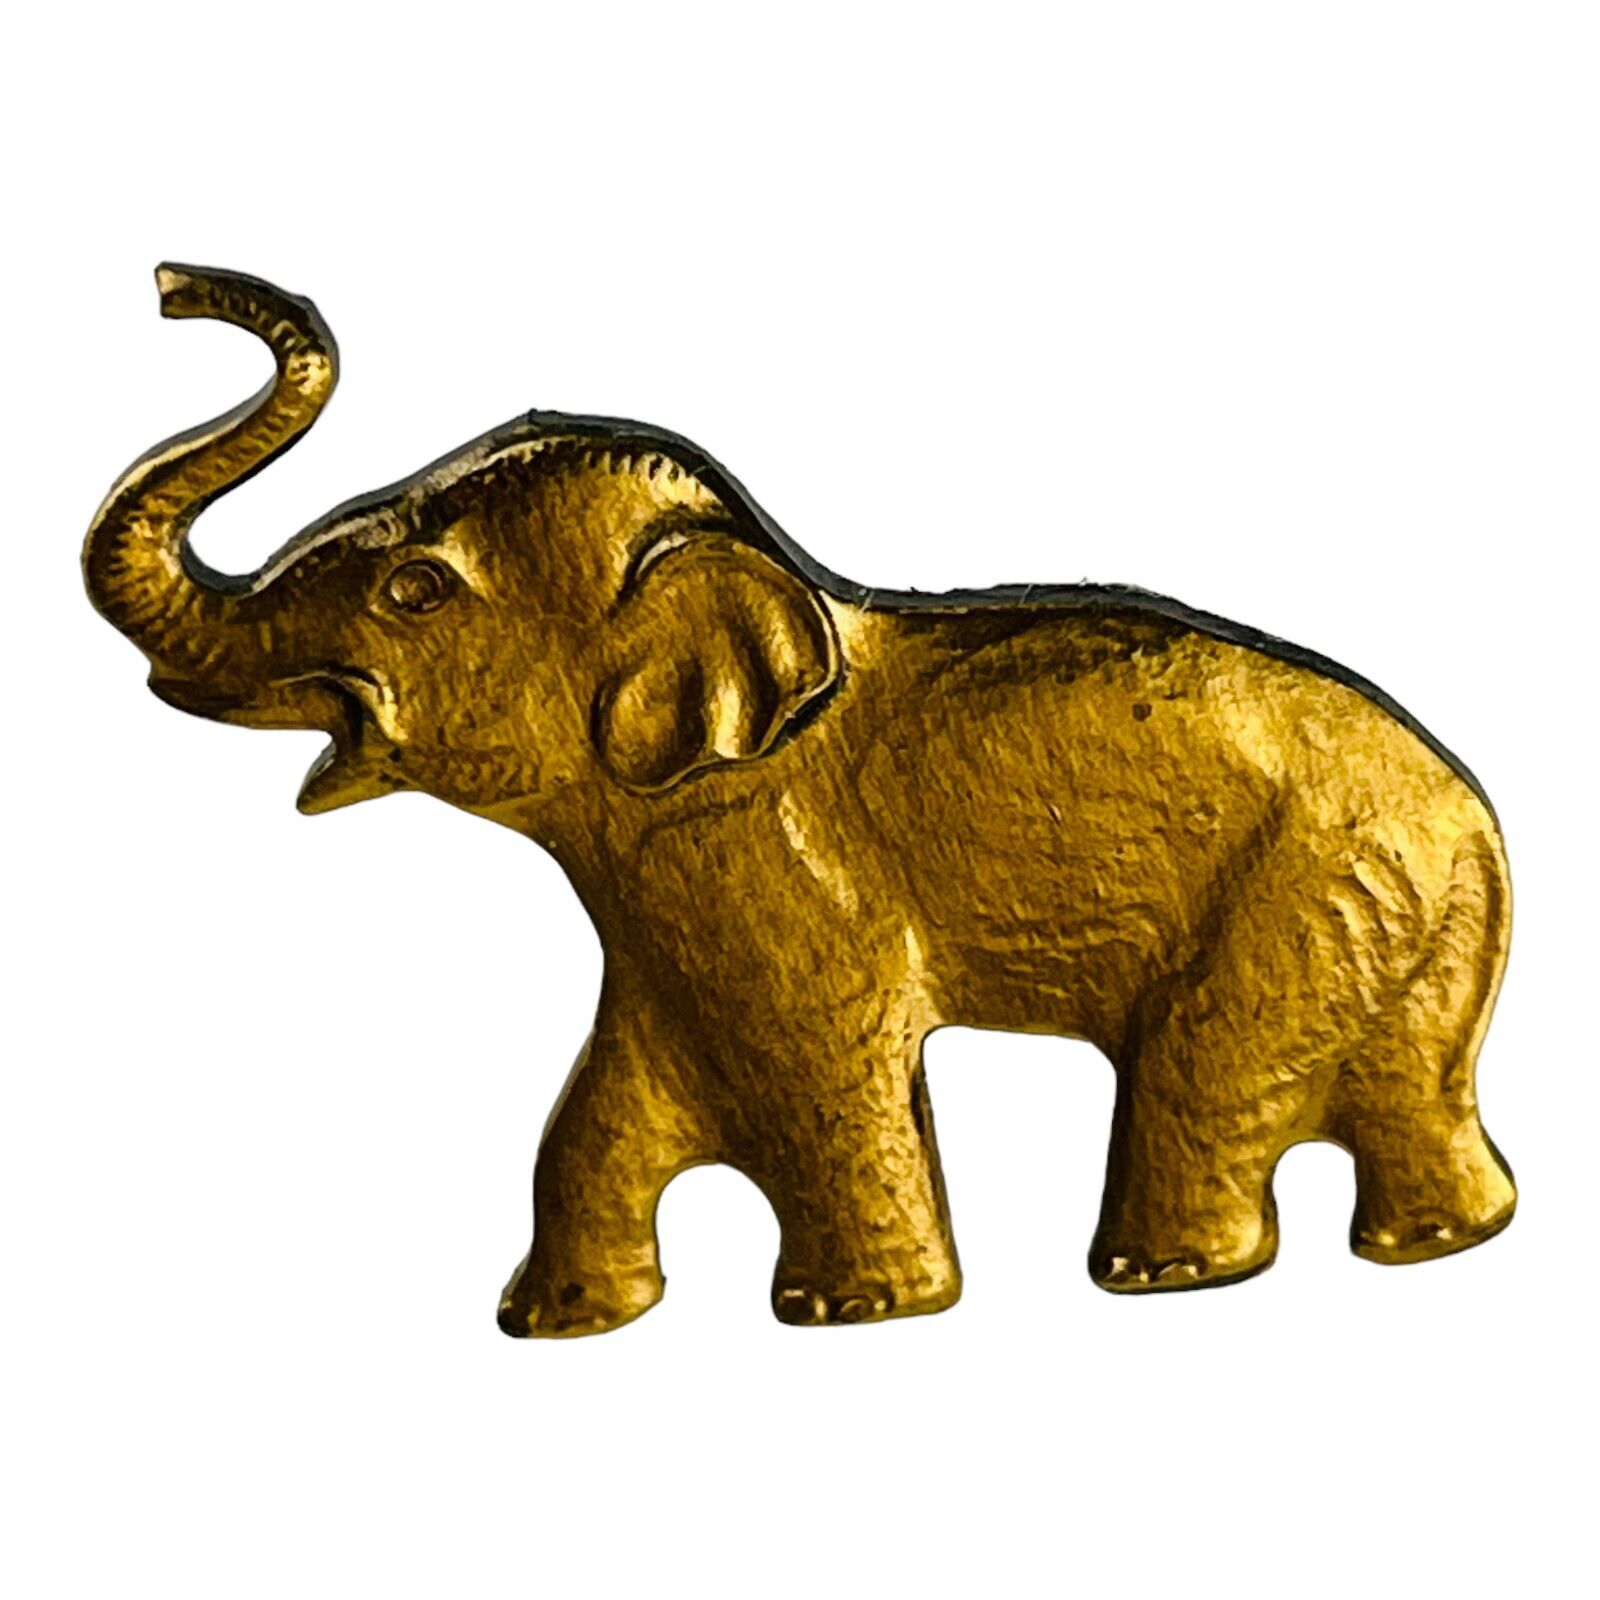 Vintage Elephant Lapel Hat Pin Gold Tone Jewelry Gift Zoo Safari Souvenir